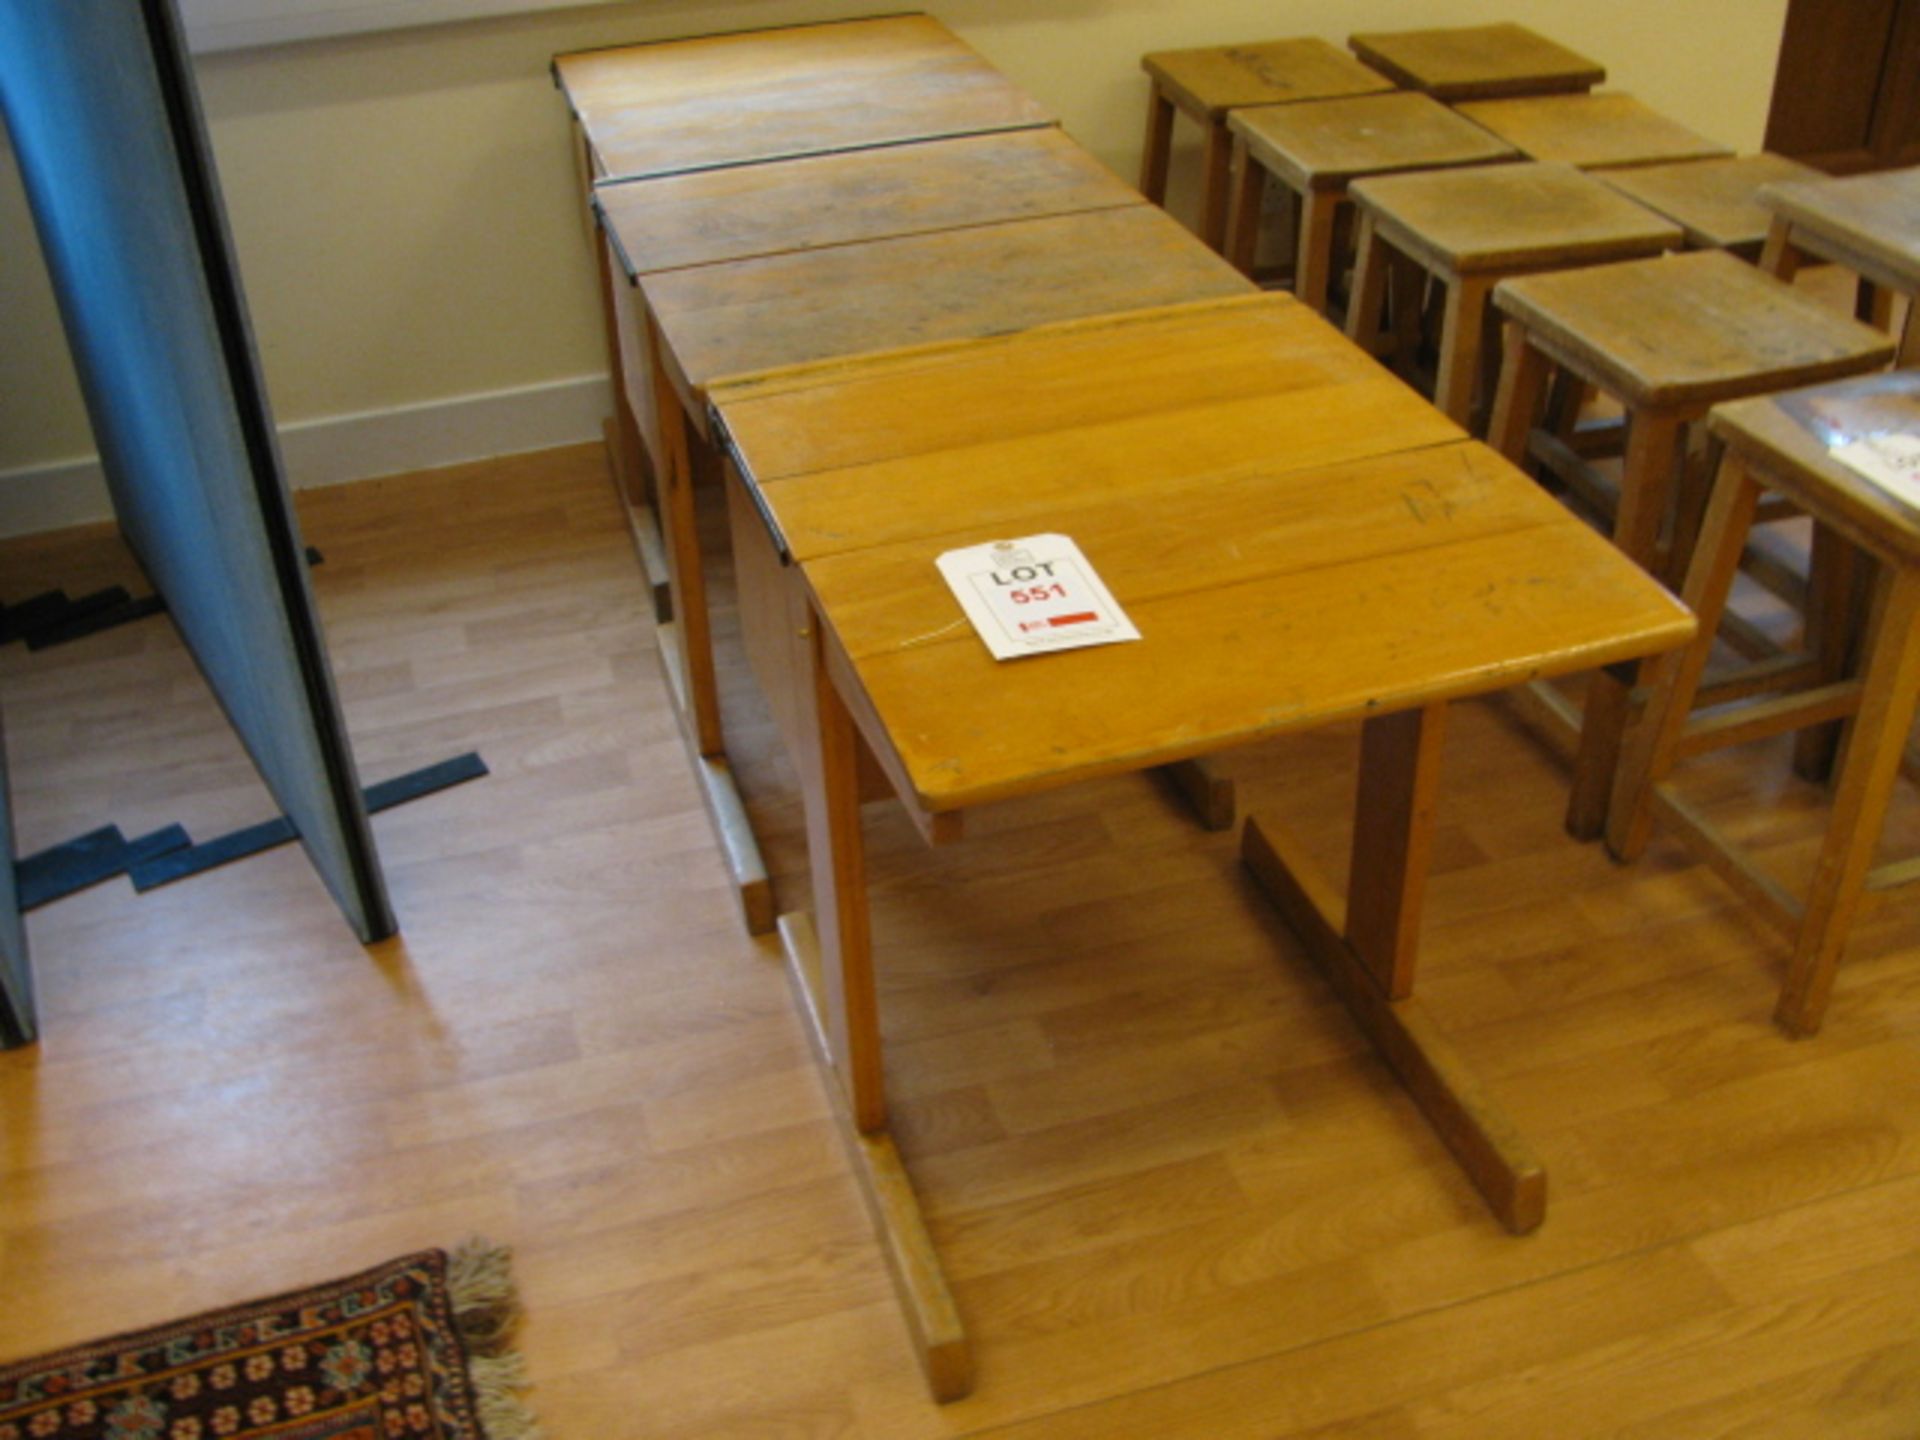 Three traditional wooden flip top desks